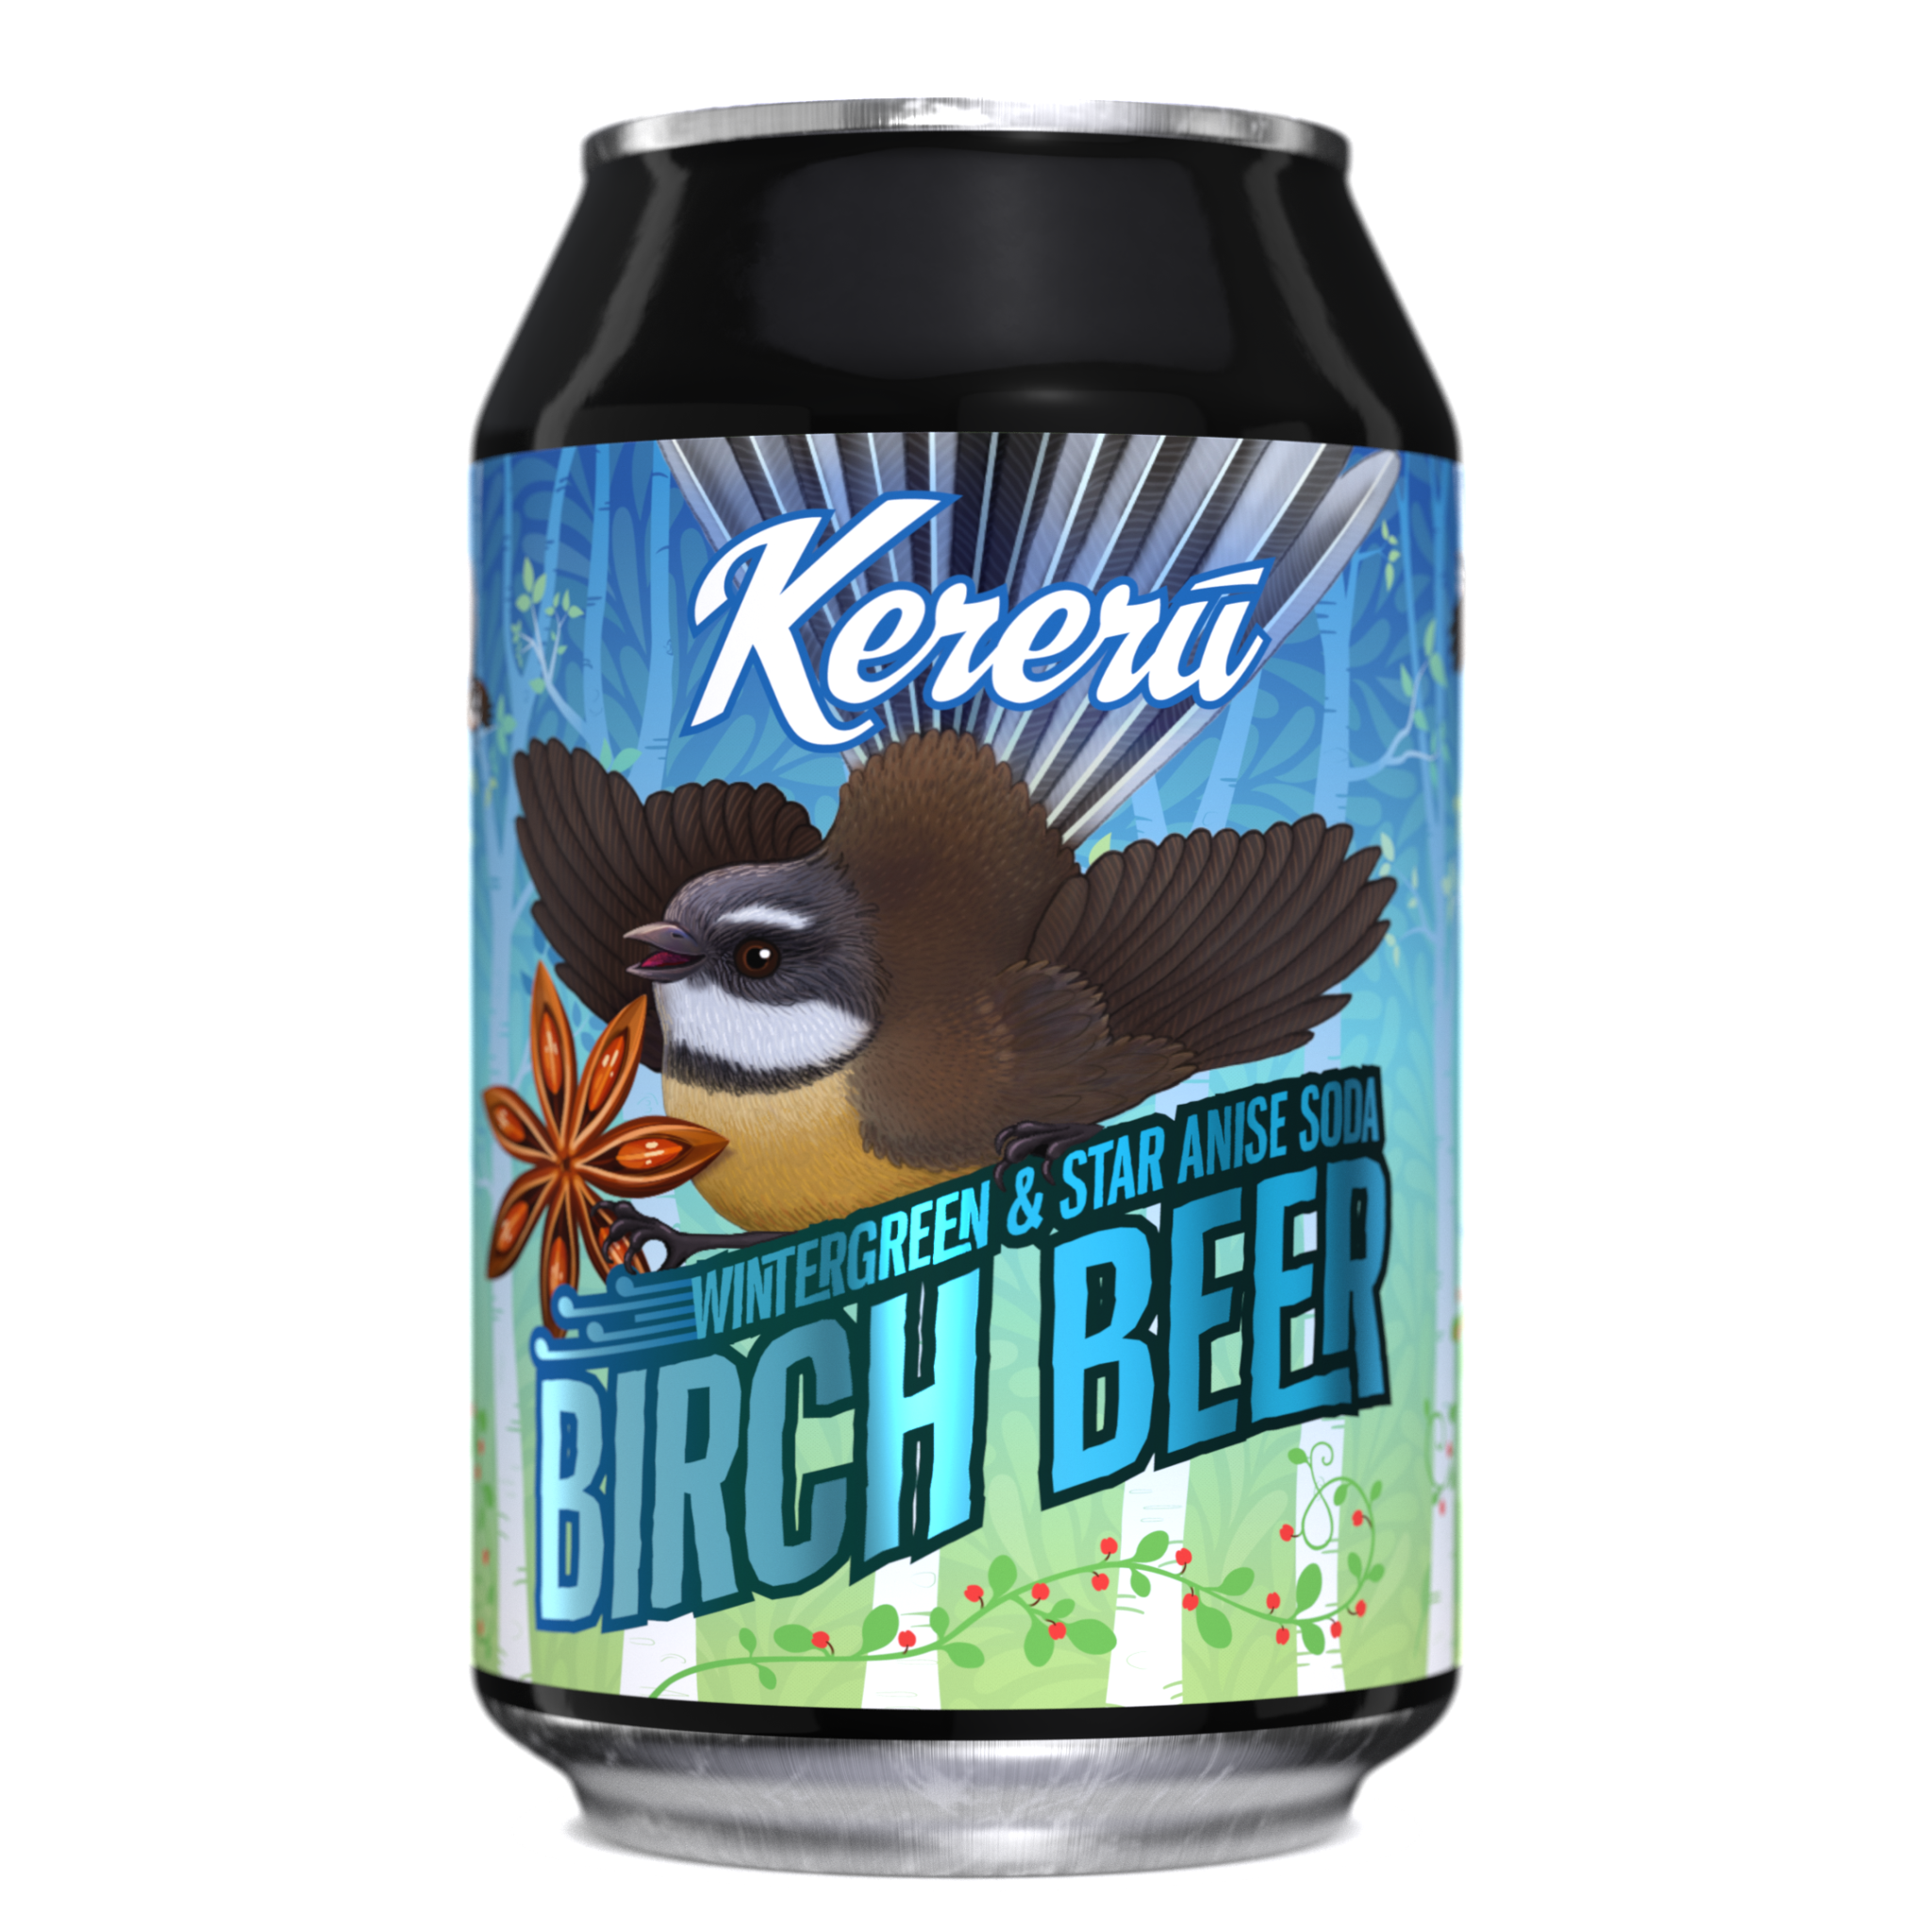 Birch Beer Soda